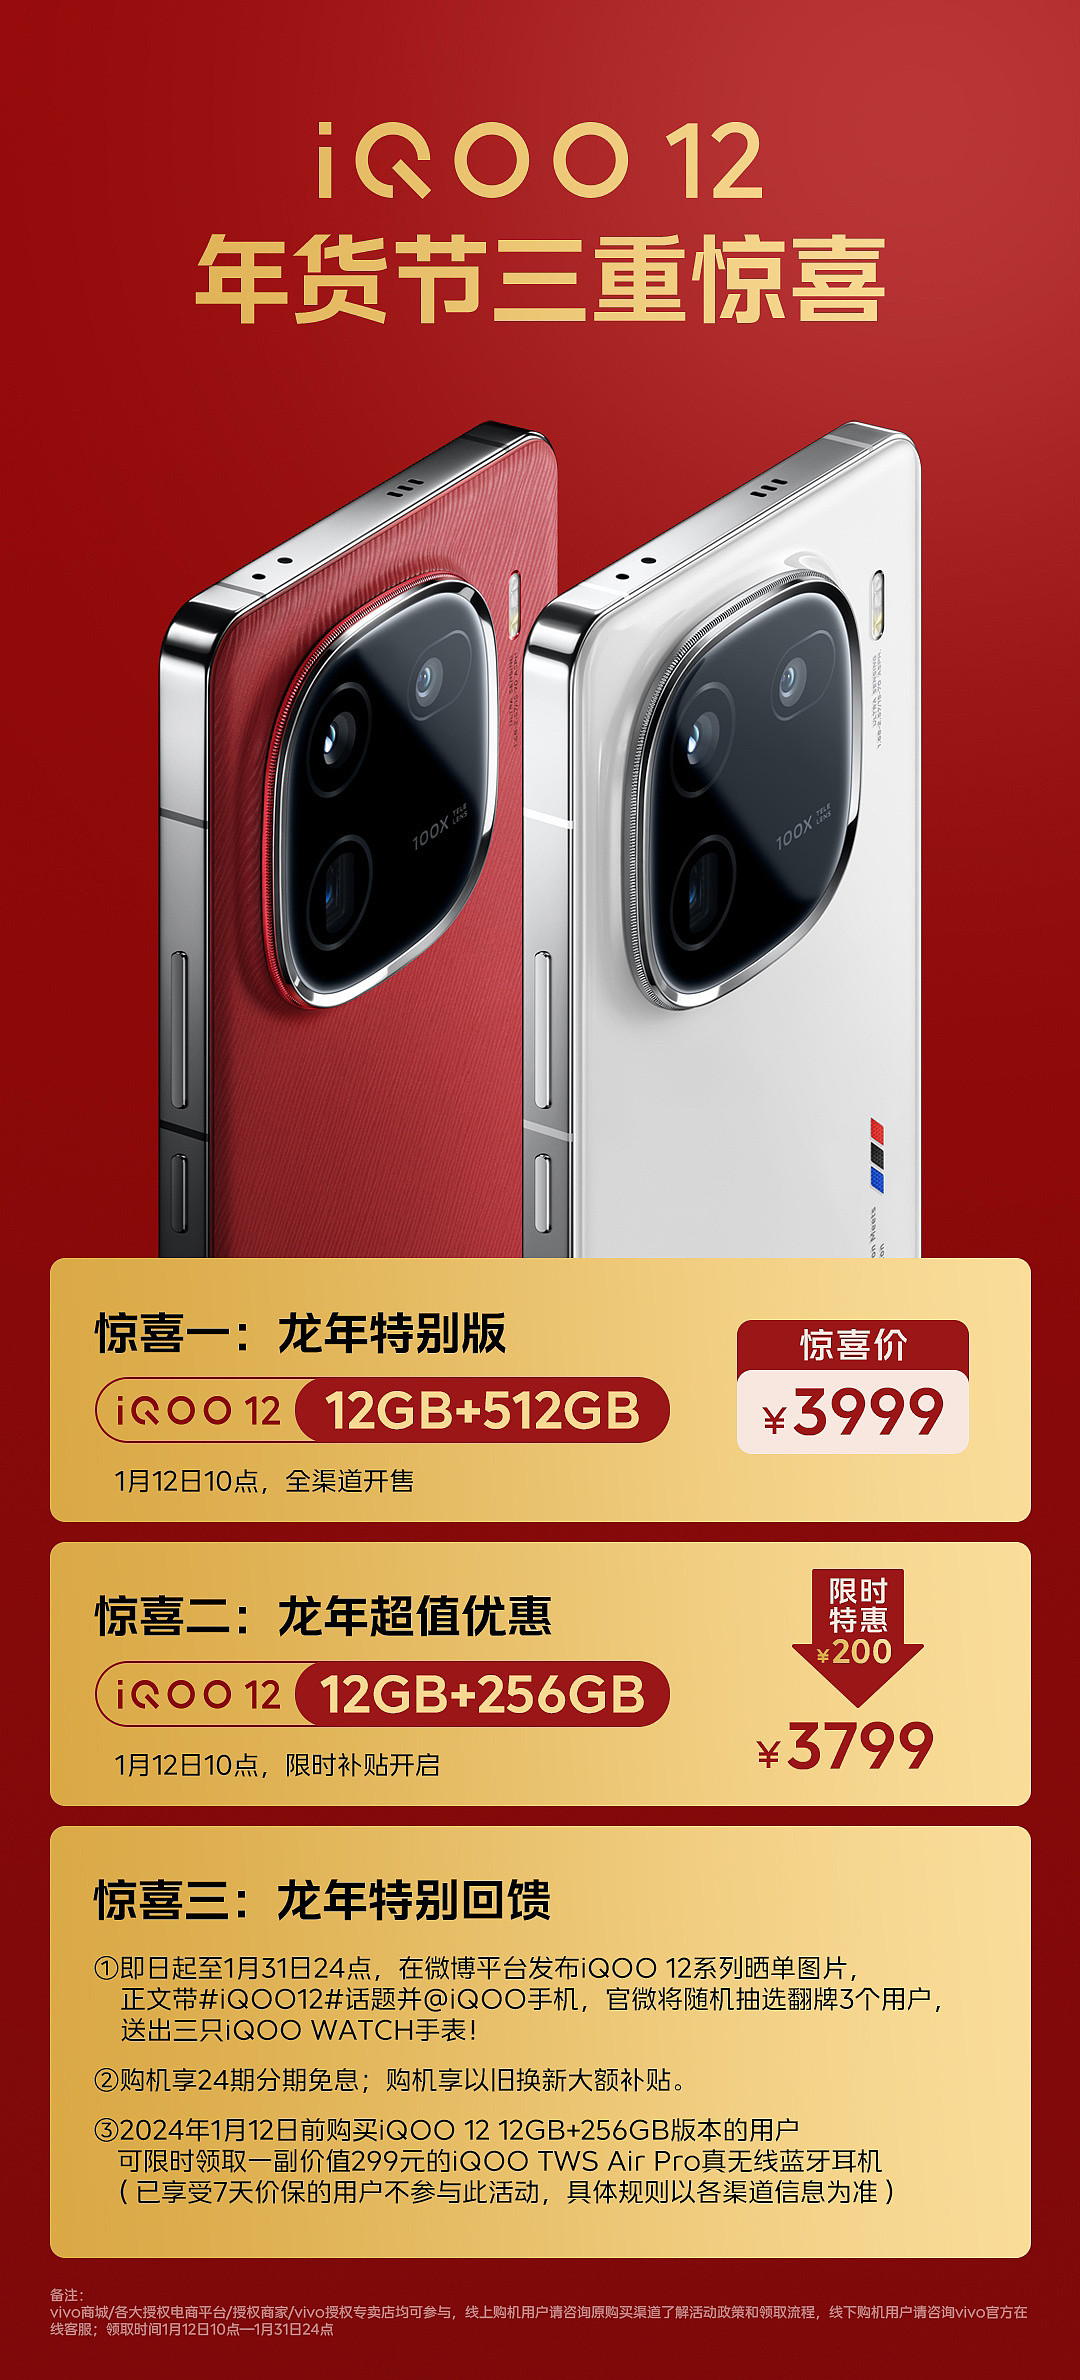 iQOO 12 手机推出龙年特别版，12GB+512GB 售价 3999 元 - 2